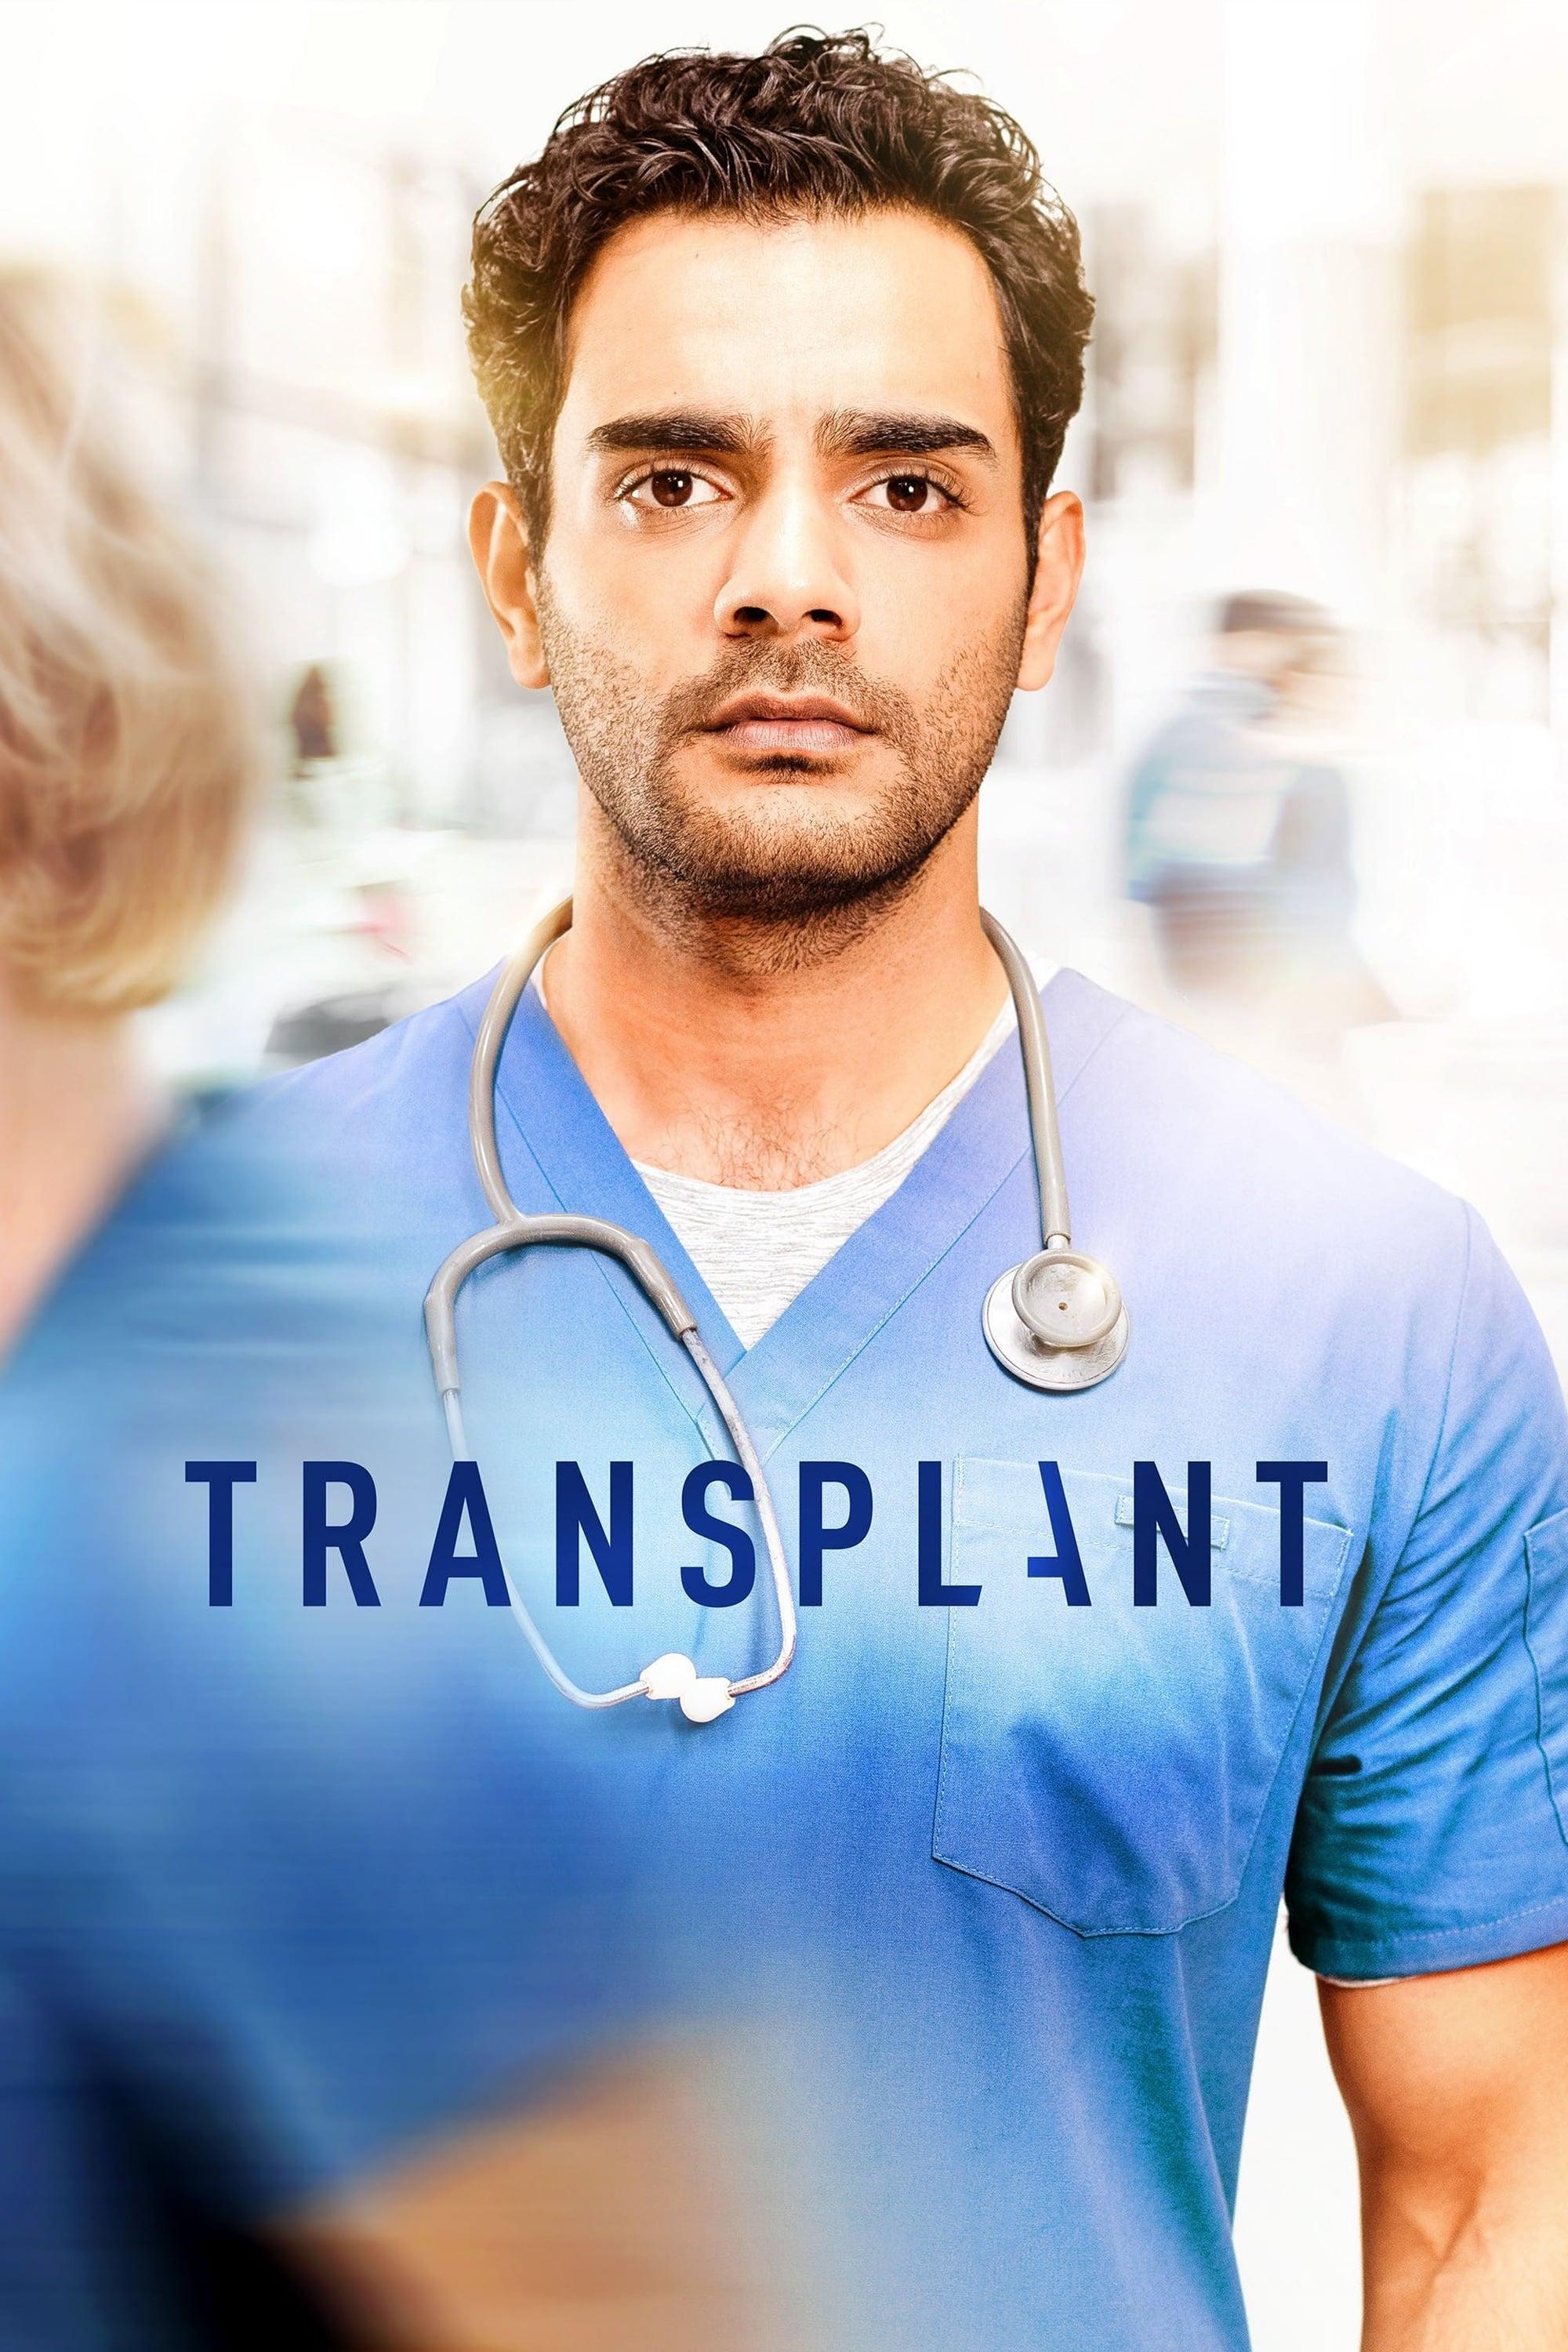 Transplant poster